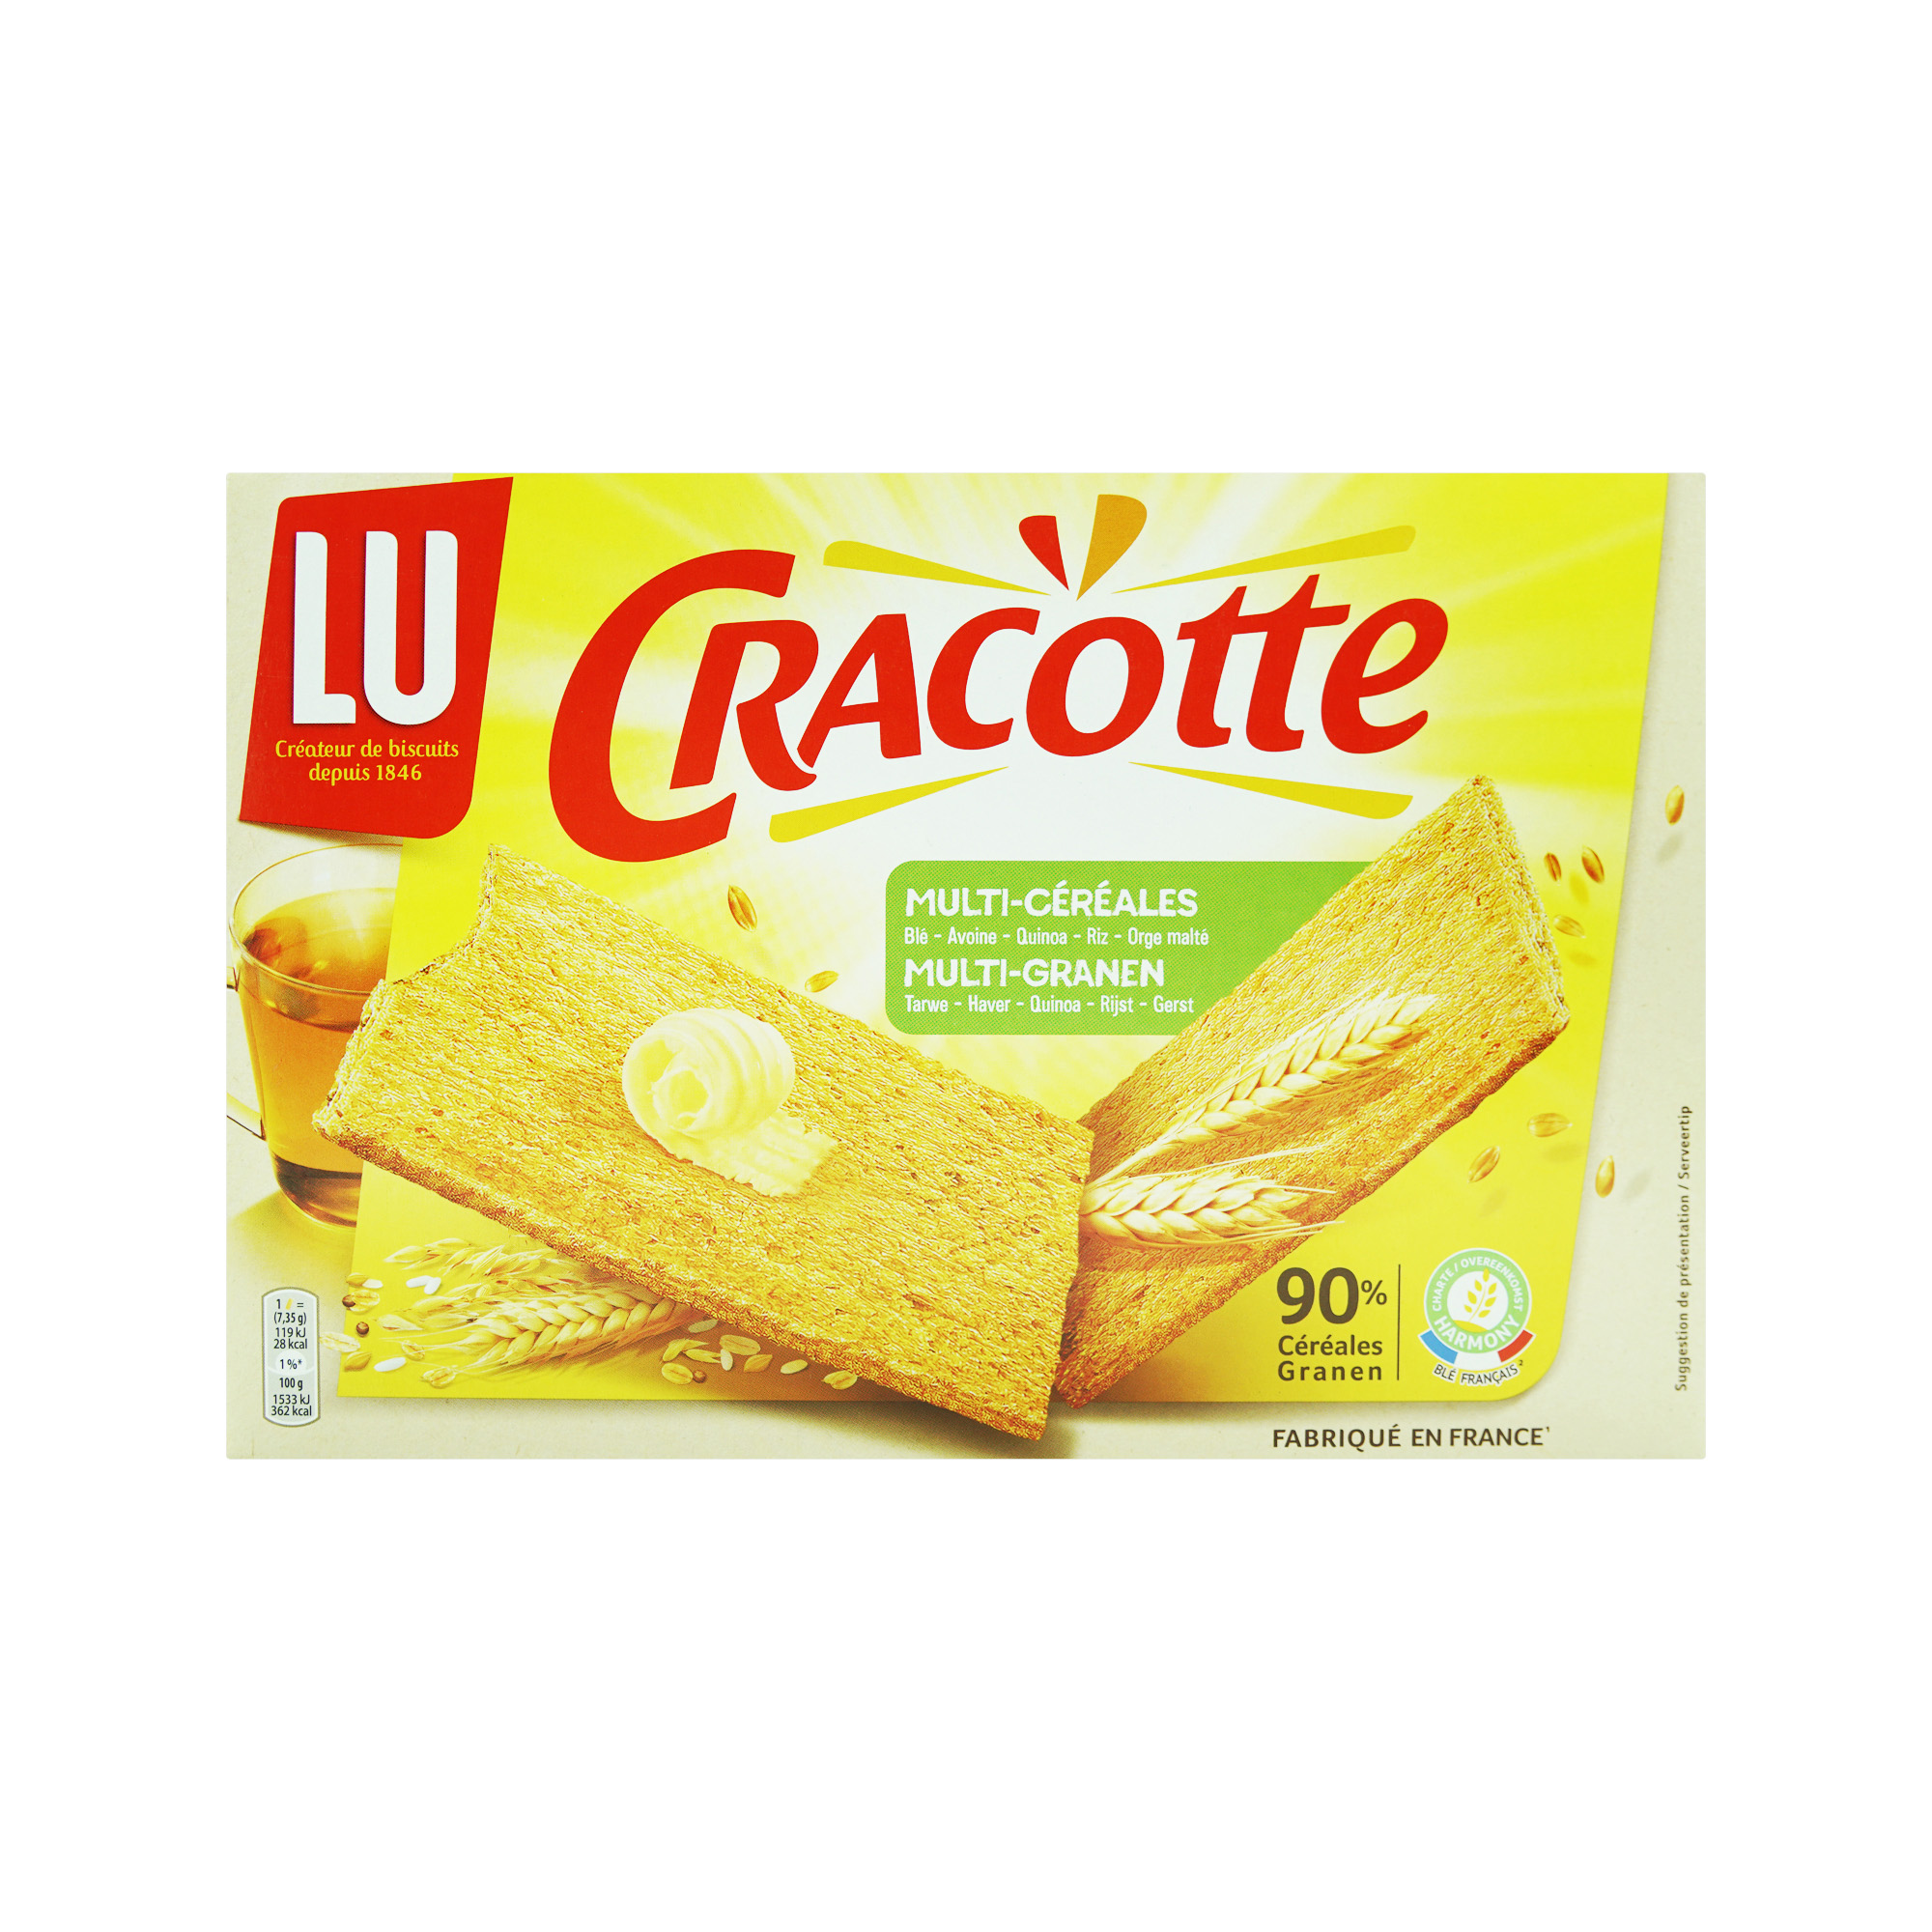 LU Cracotte Multi Cereals (250g)